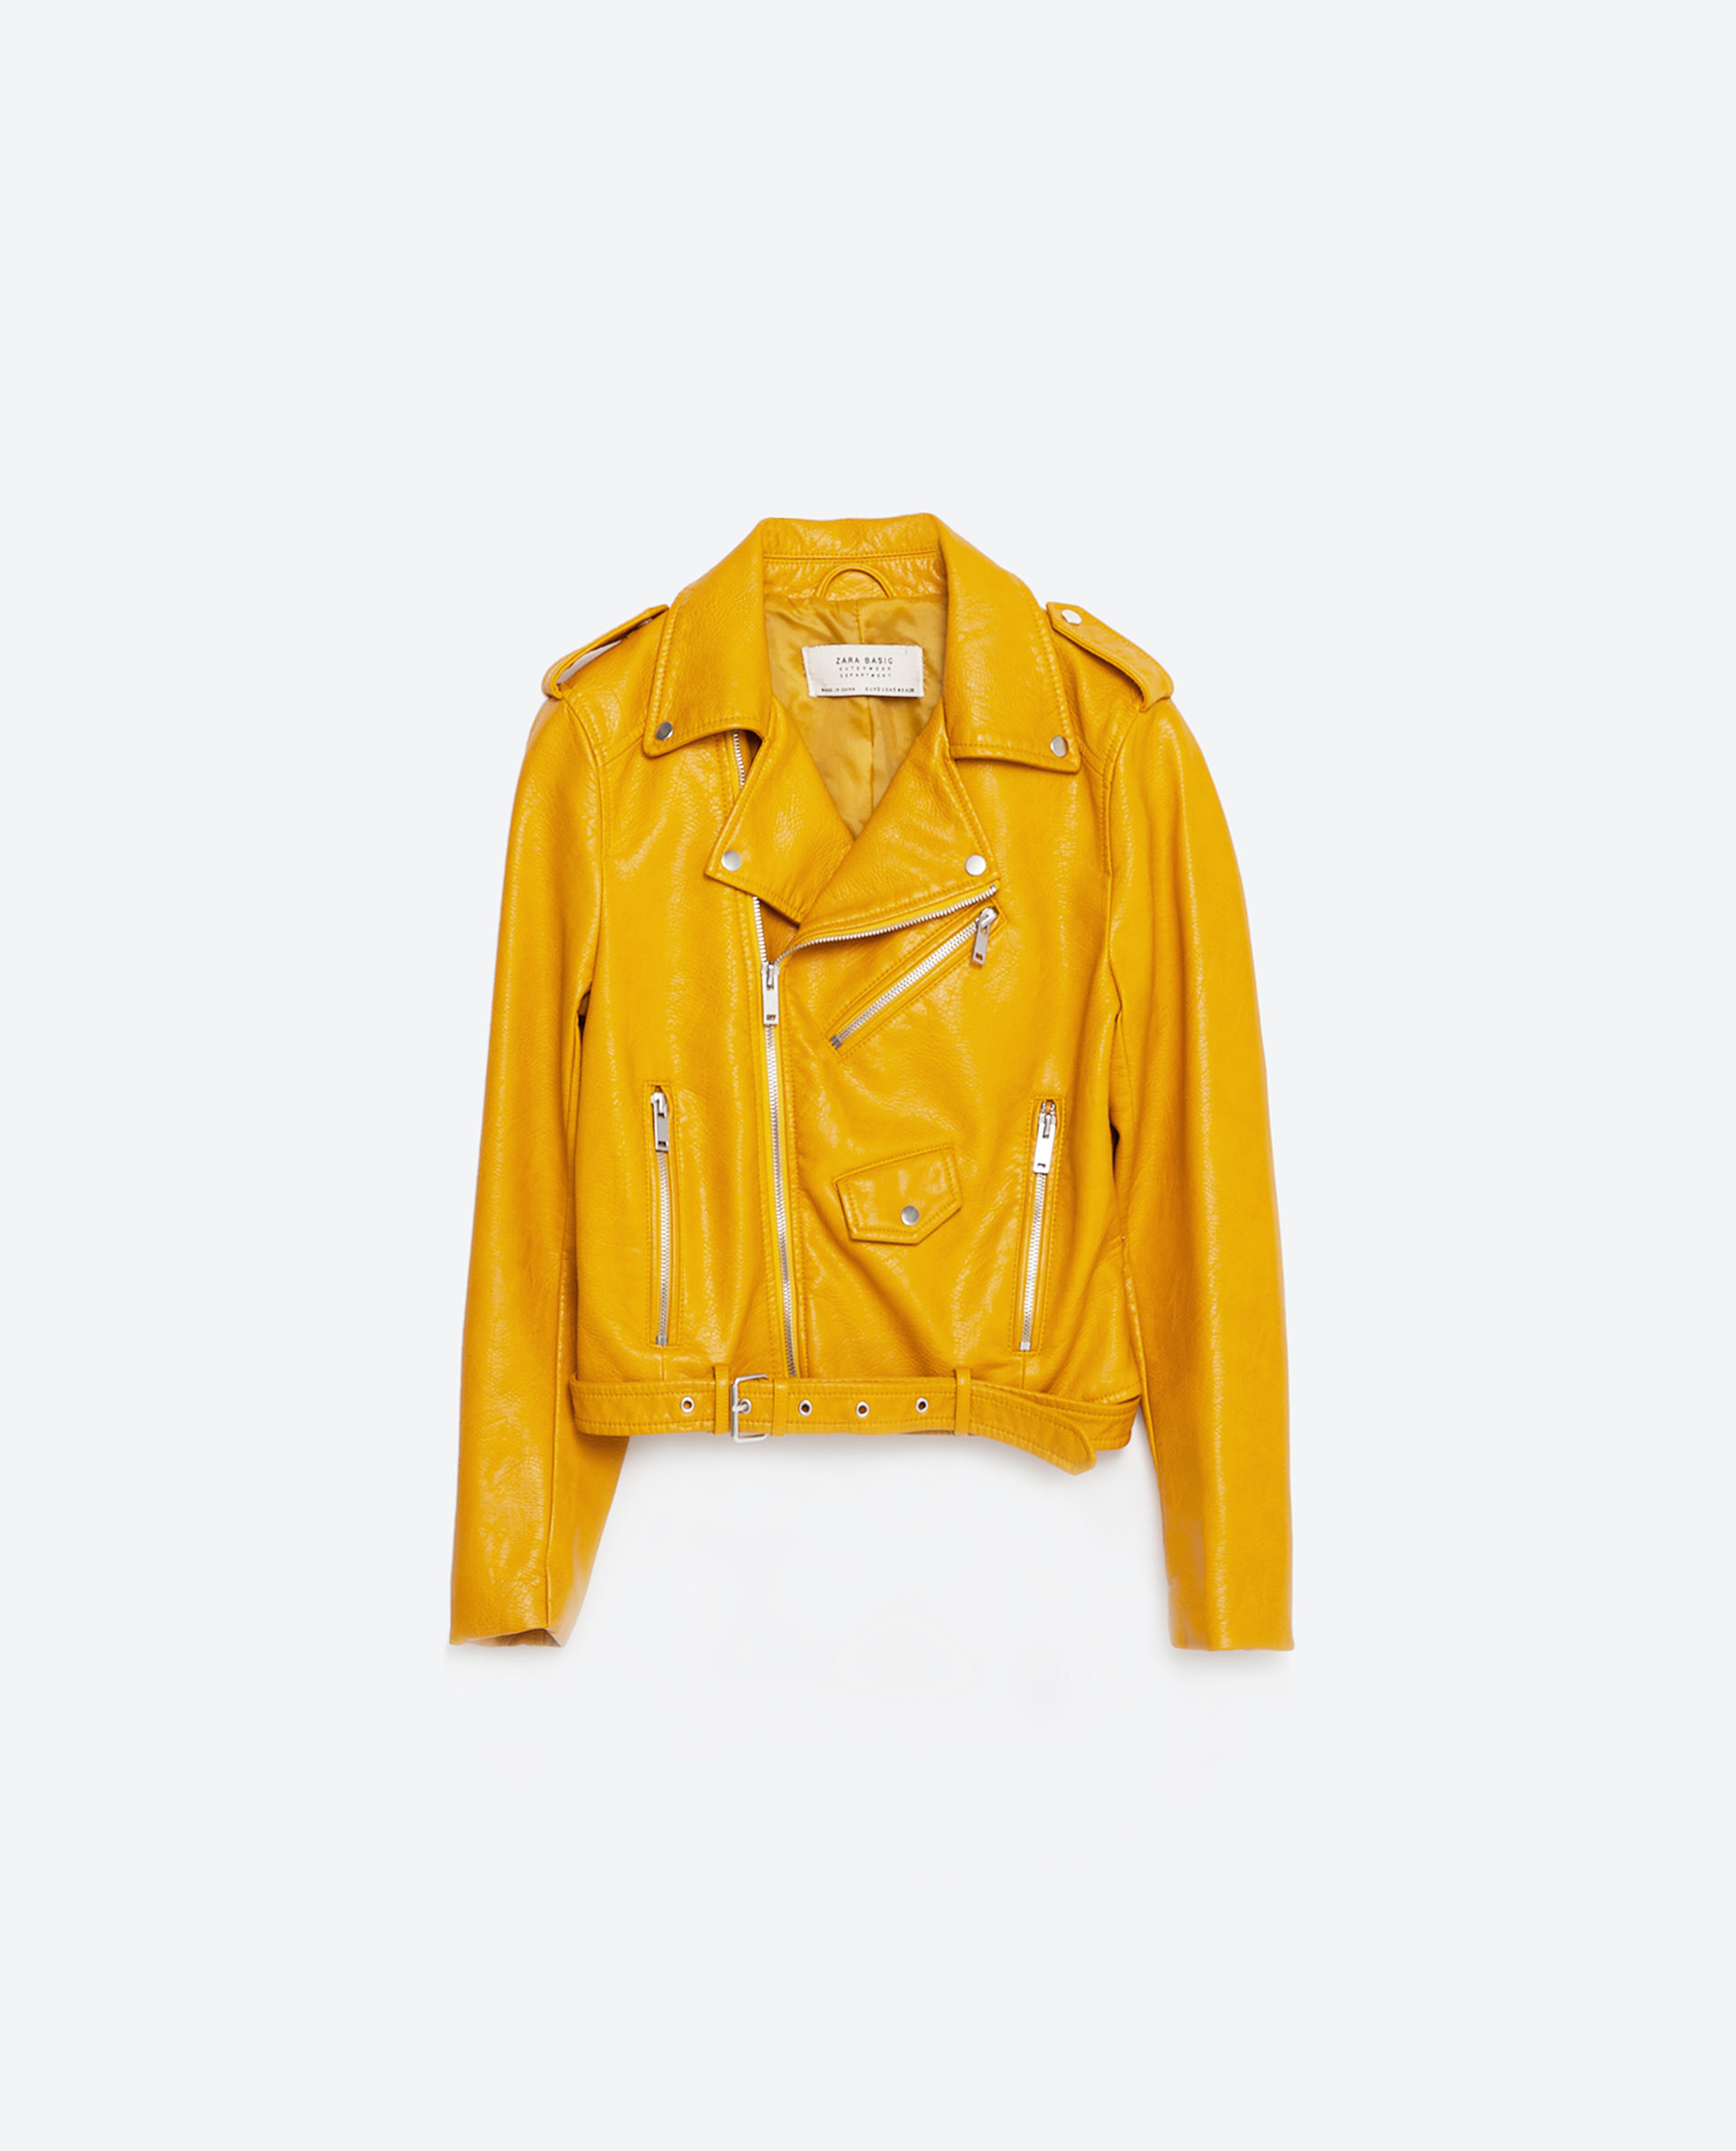 zara yellow jacket